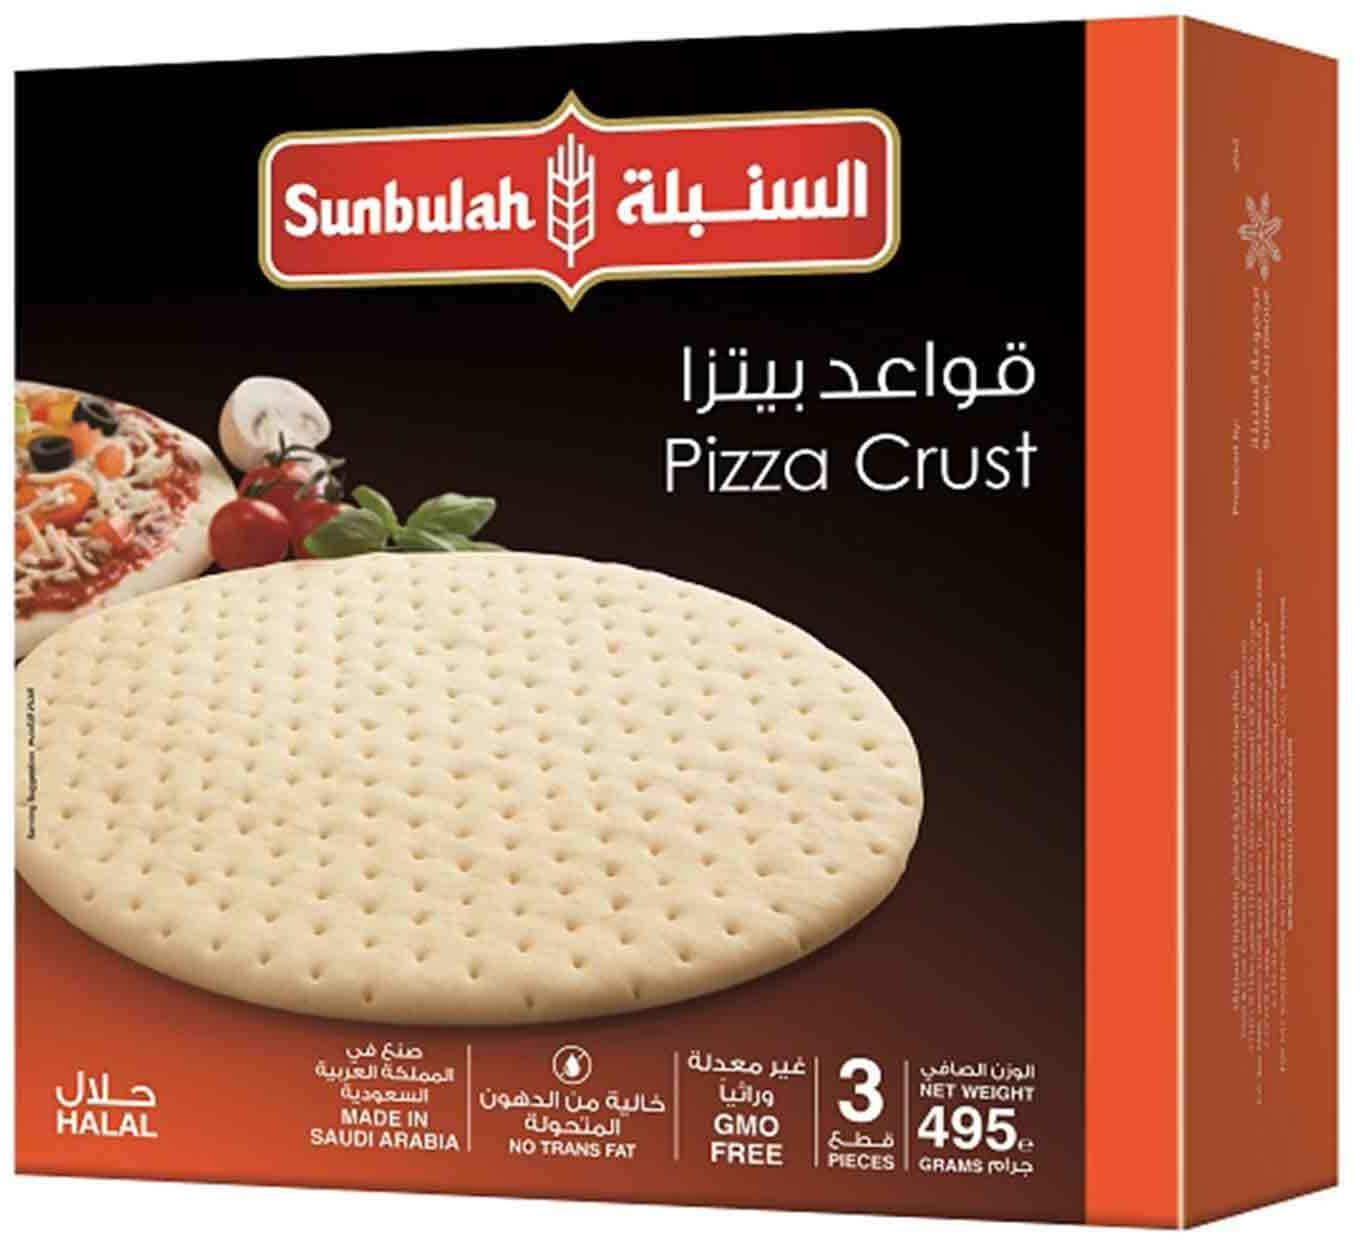 Sunbulah pizza crust 495 g